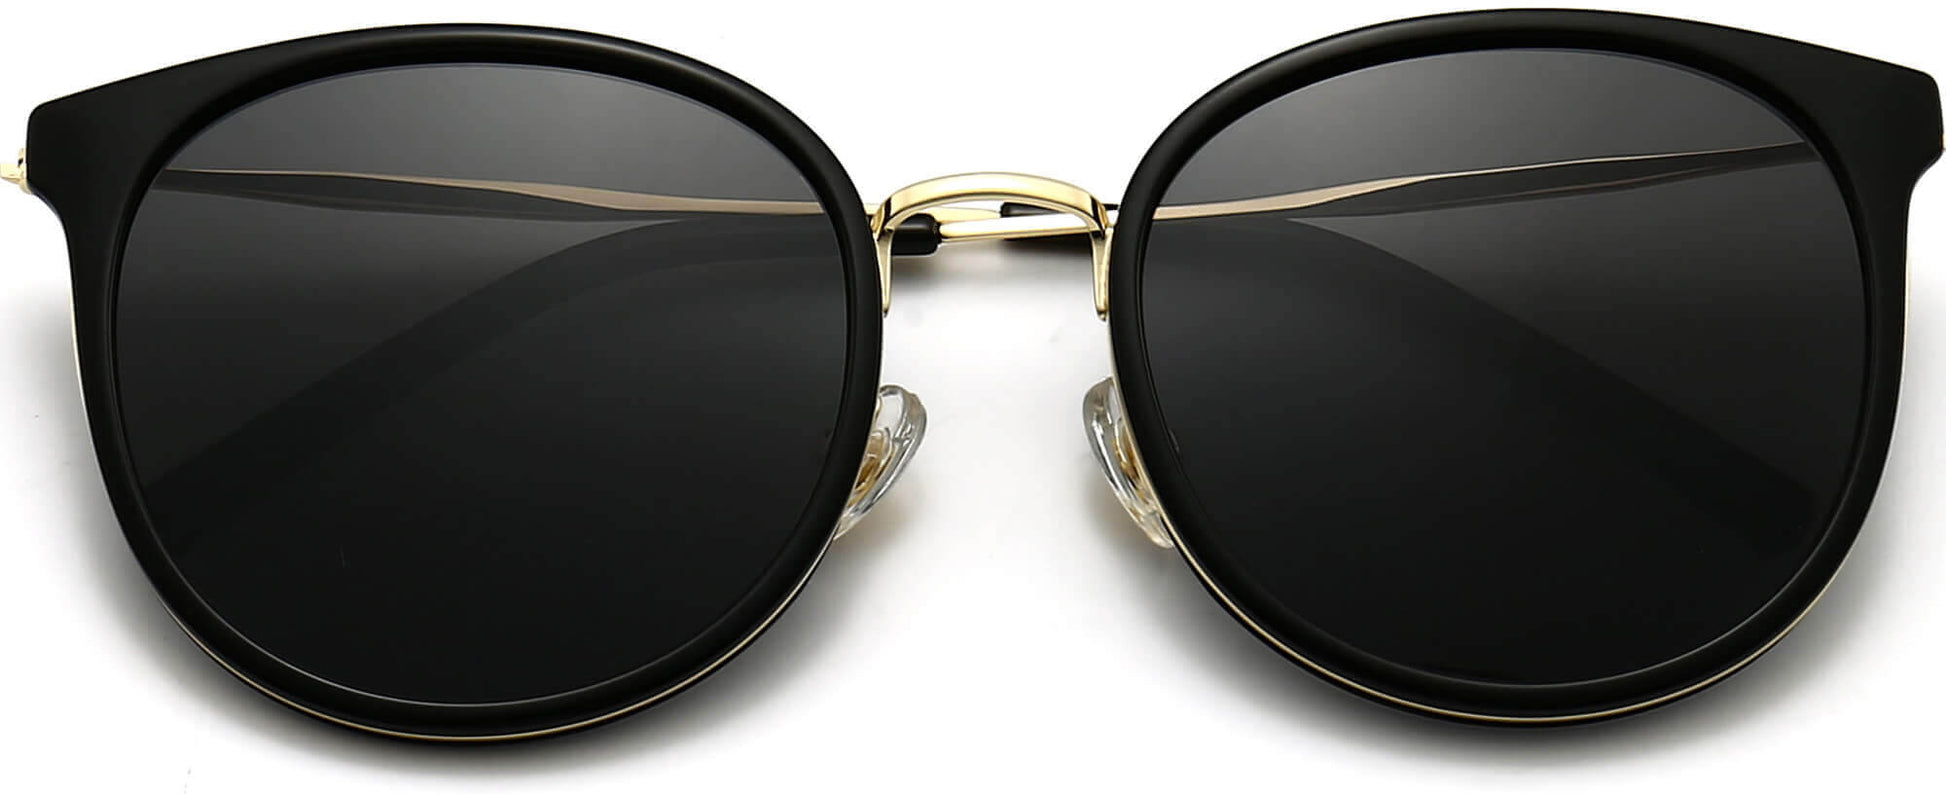 Brody Black Plastic Sunglasses from ANRRI, closed view